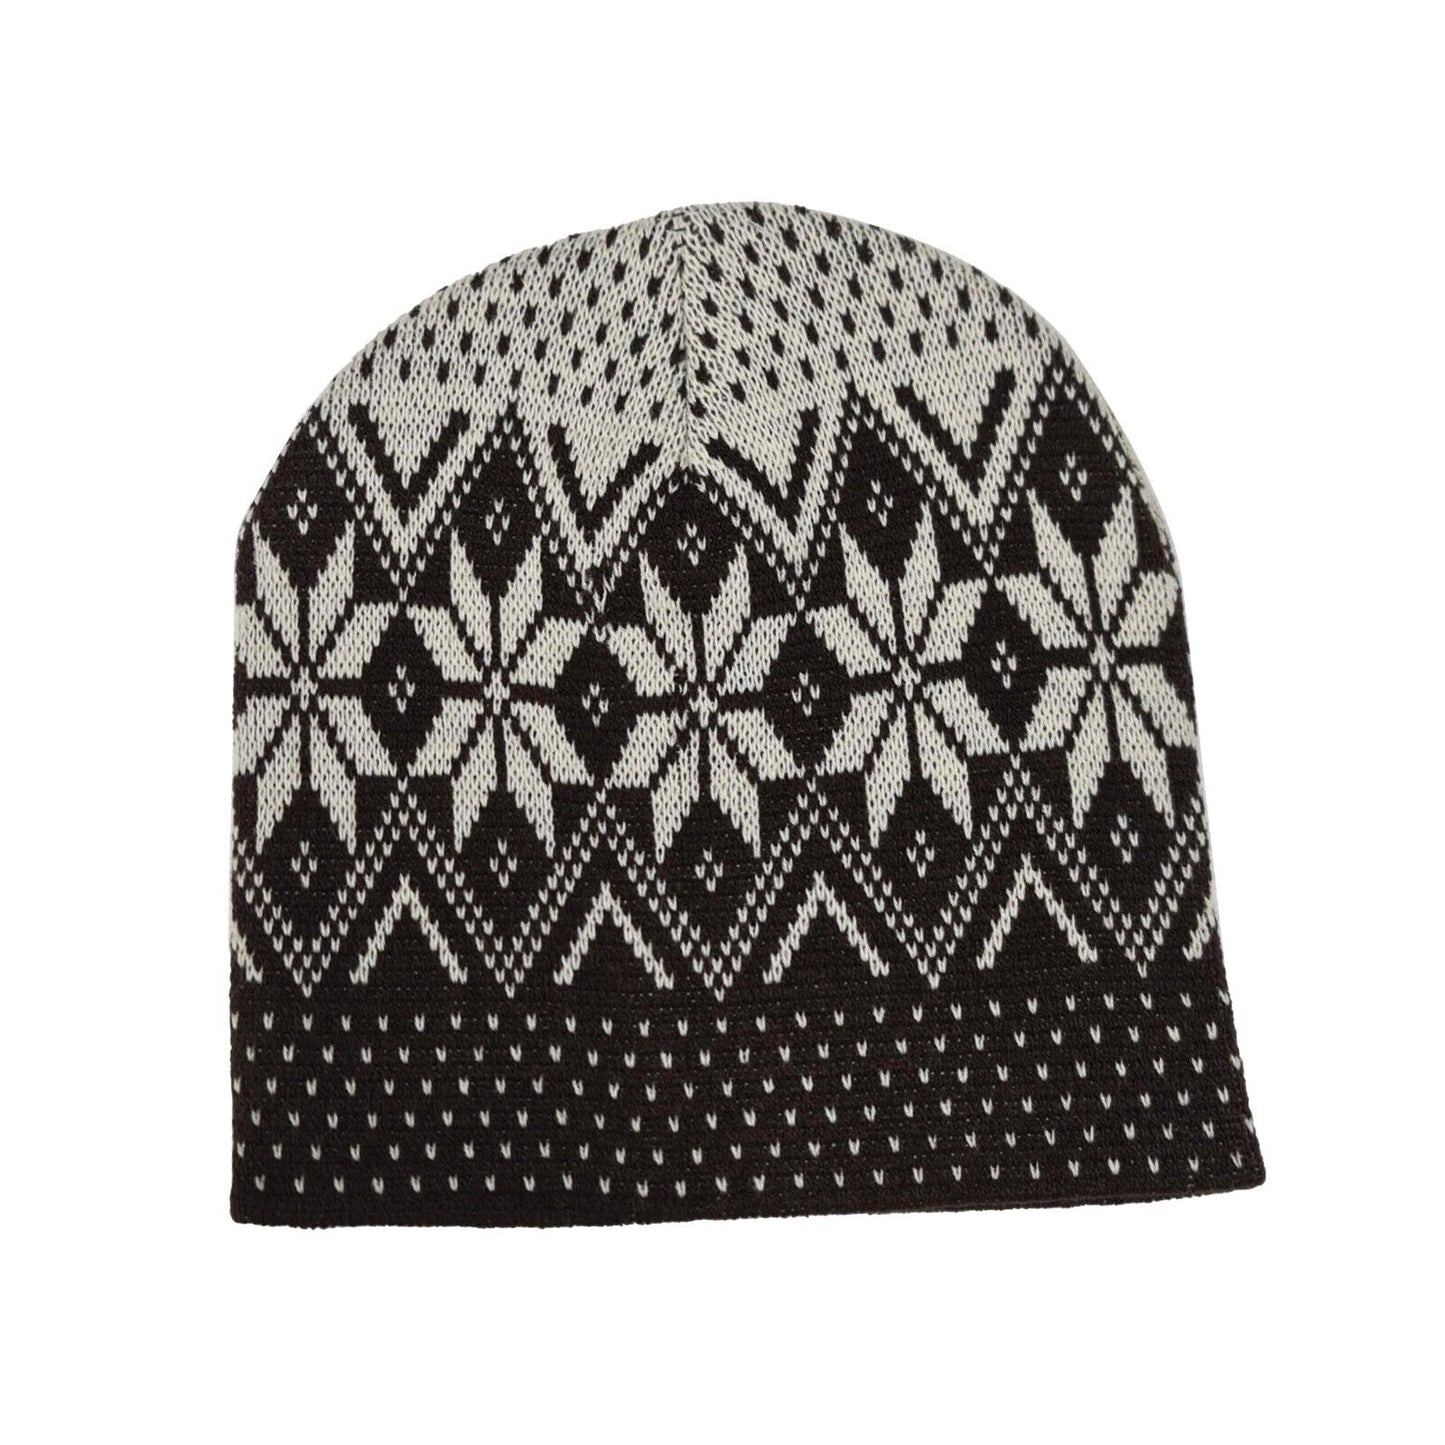 Adult Winter Snow Beanie Hat